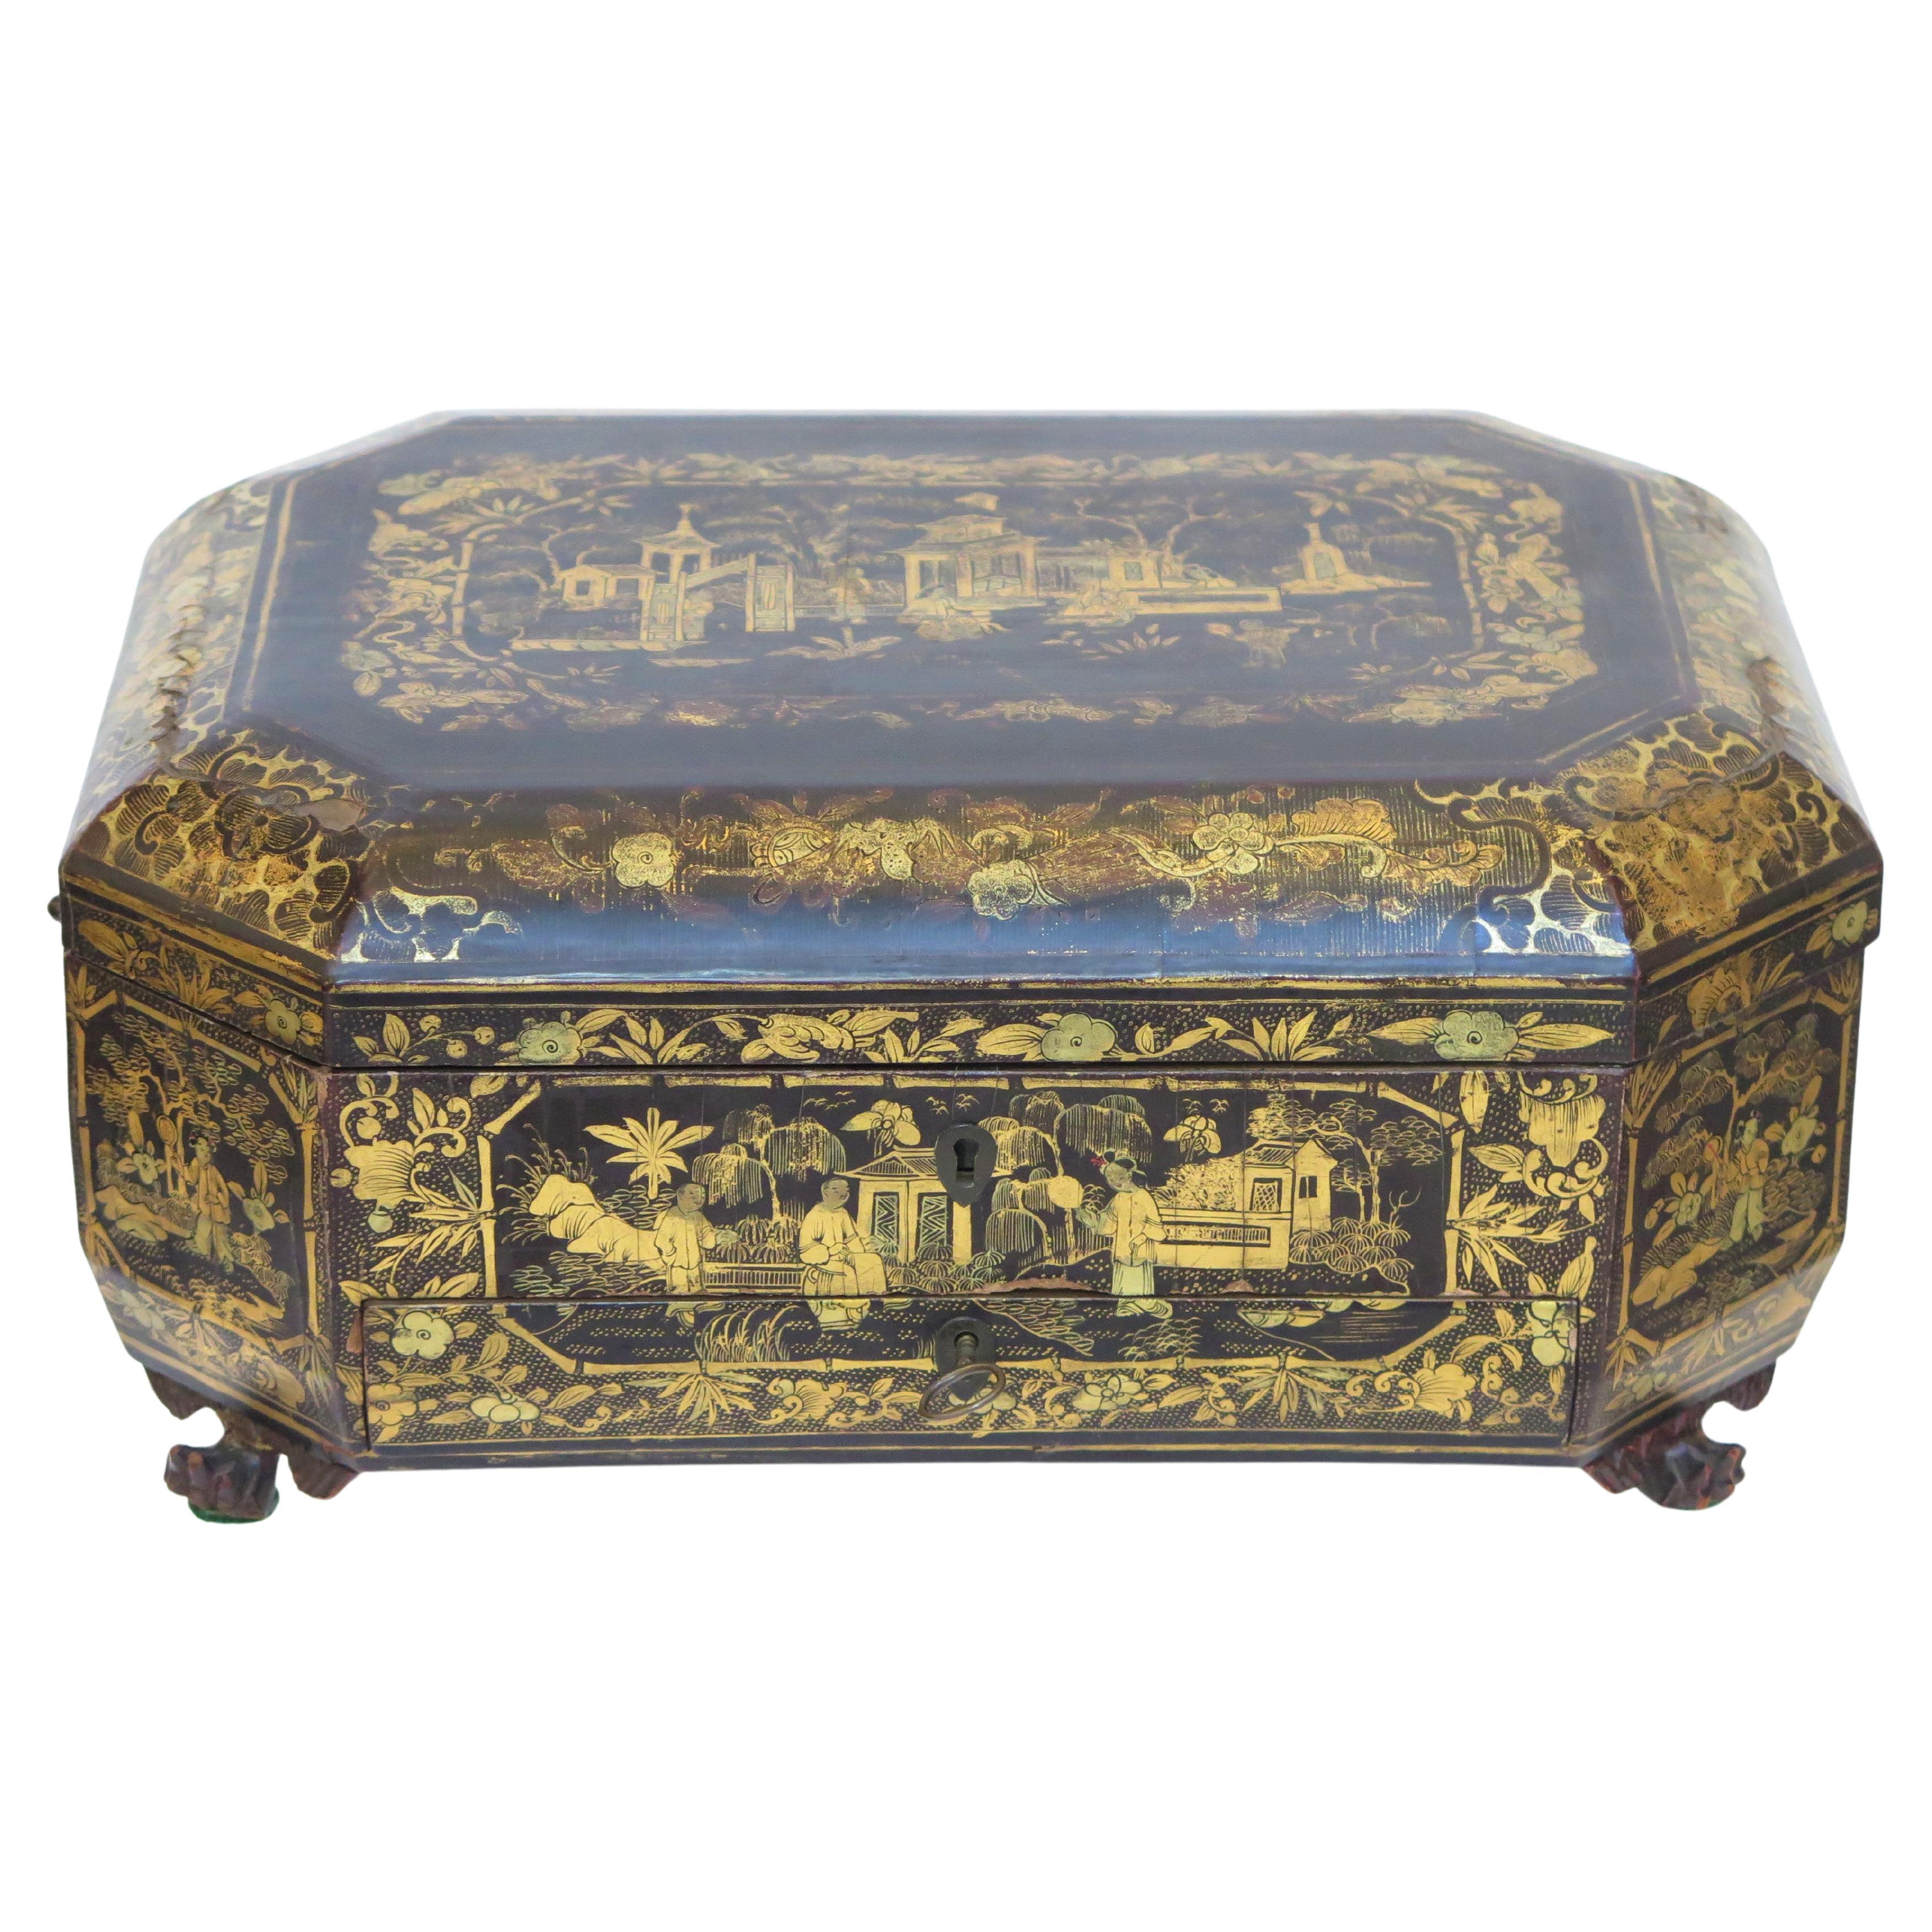 Ealy 19. Jahrhundert Chinesisch Export Lacquer Nähen Box